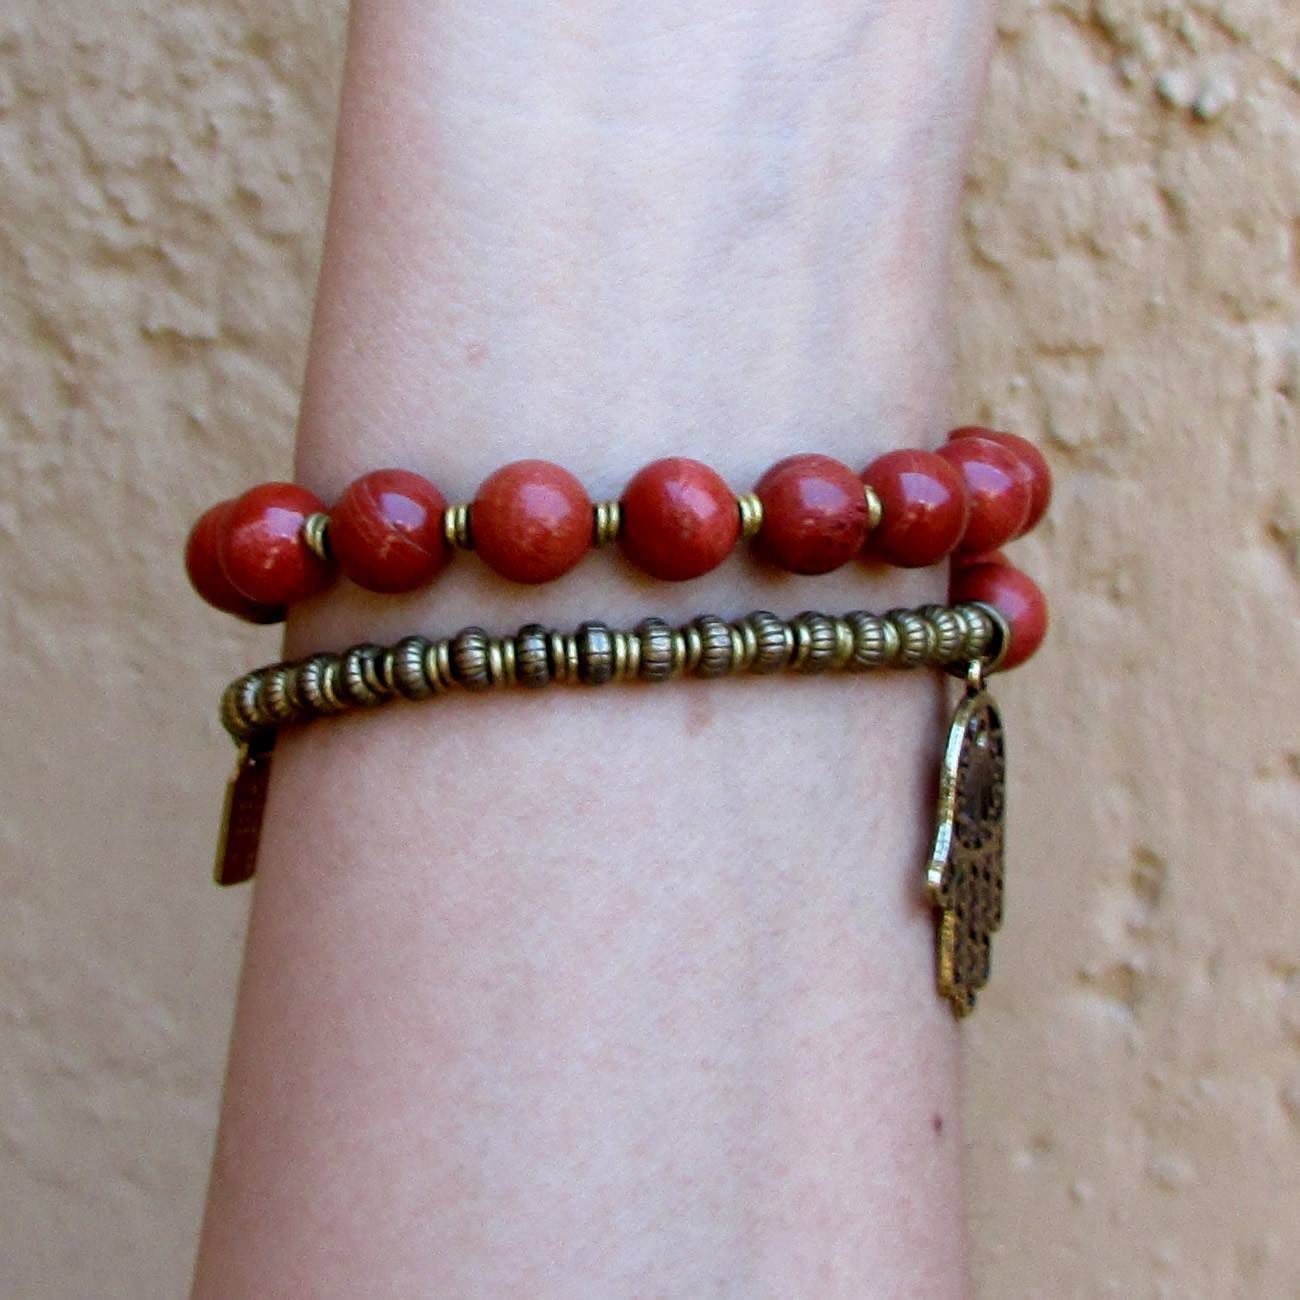 Bracelets - Grounding, Root Chakra, Genuine Red Jasper 27 Bead Mala Bracelet With Hamsa Hand